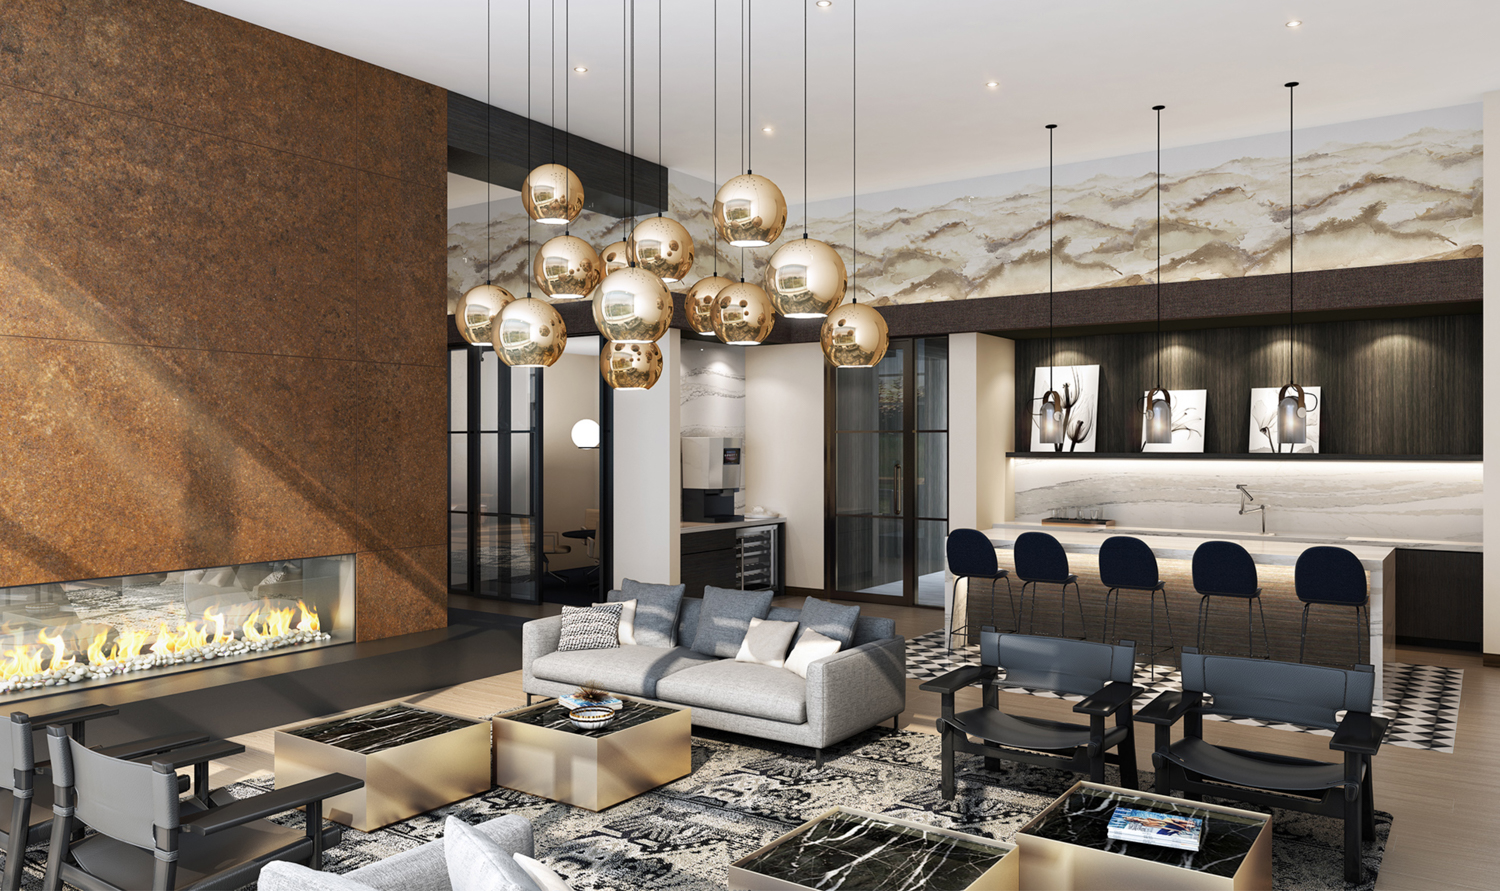 The Asher interior lounge, rendering via Carmel Partners